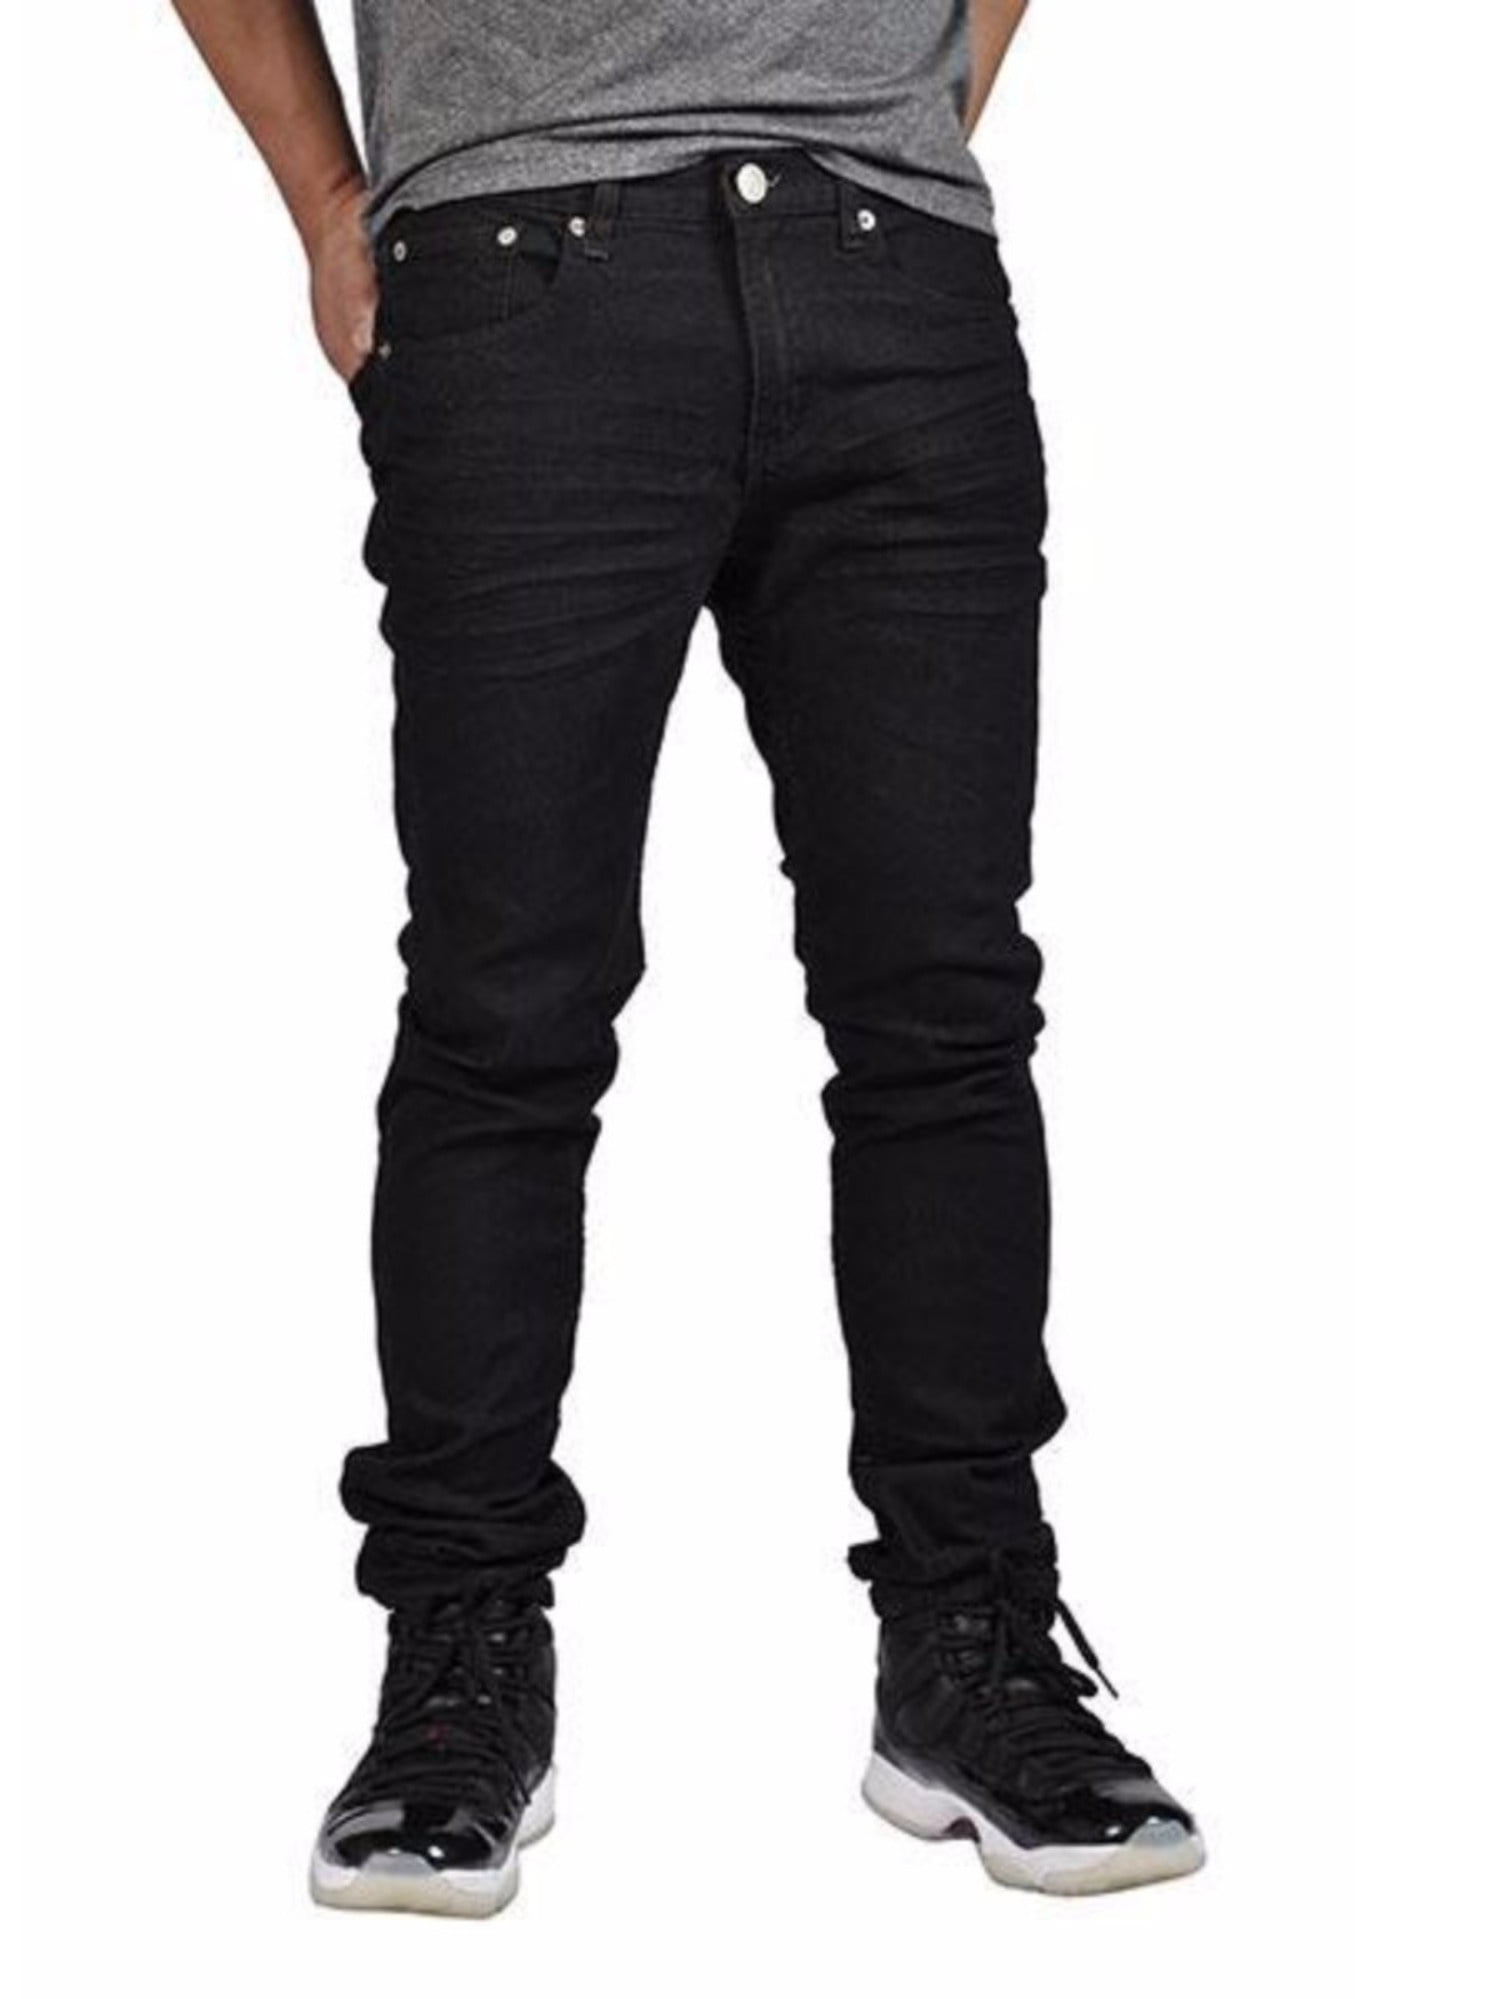 Indigo People Men's Denim Jeans Skinny Fit Tapered Leg 29023 Black ...